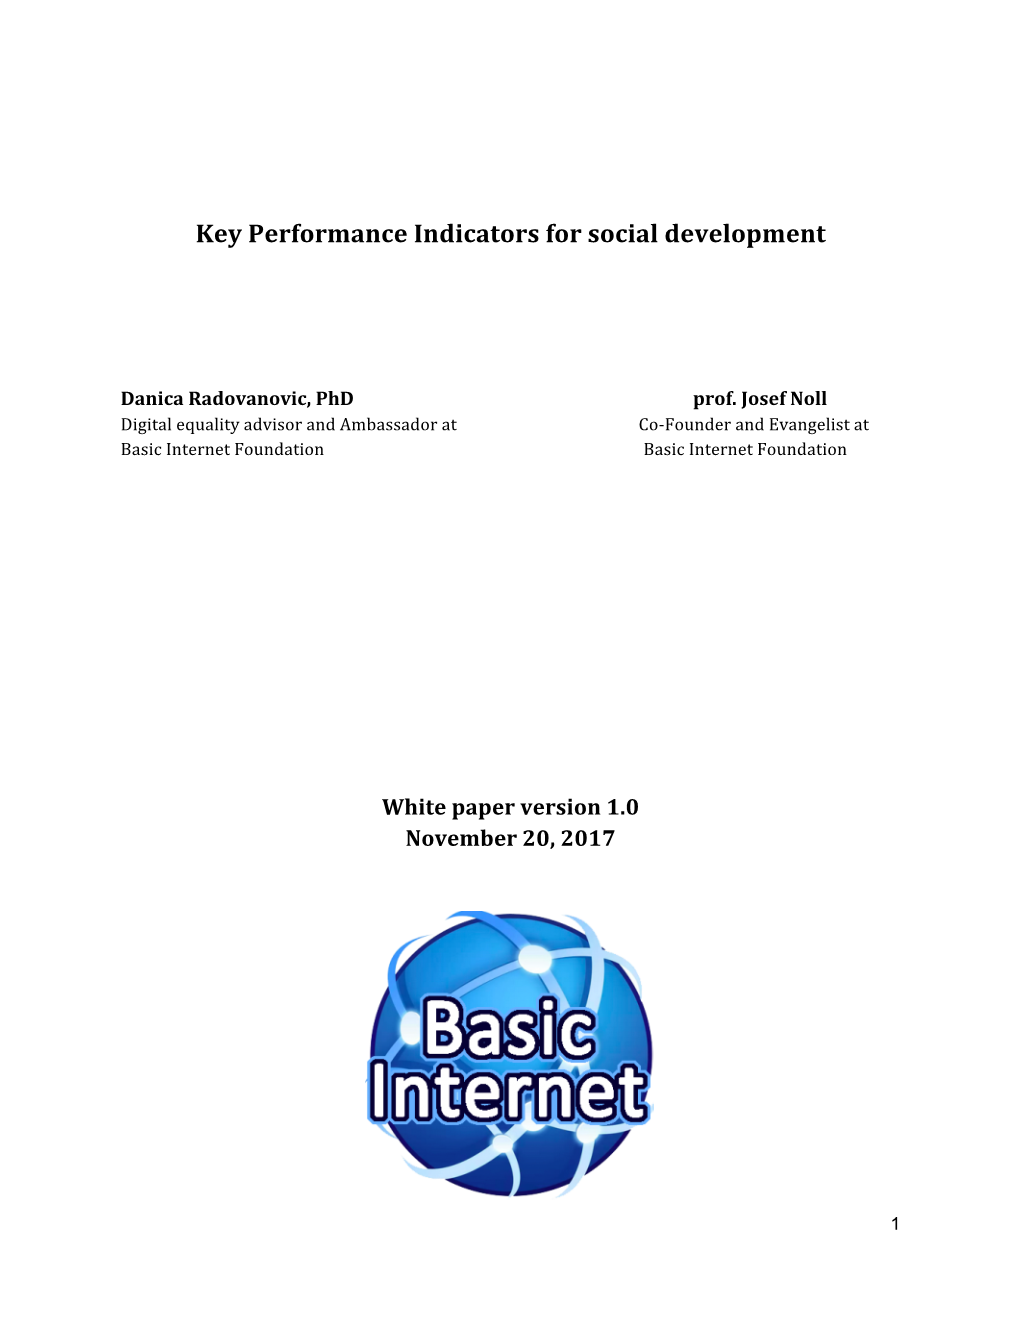 Key Performance Indicators for Social Development